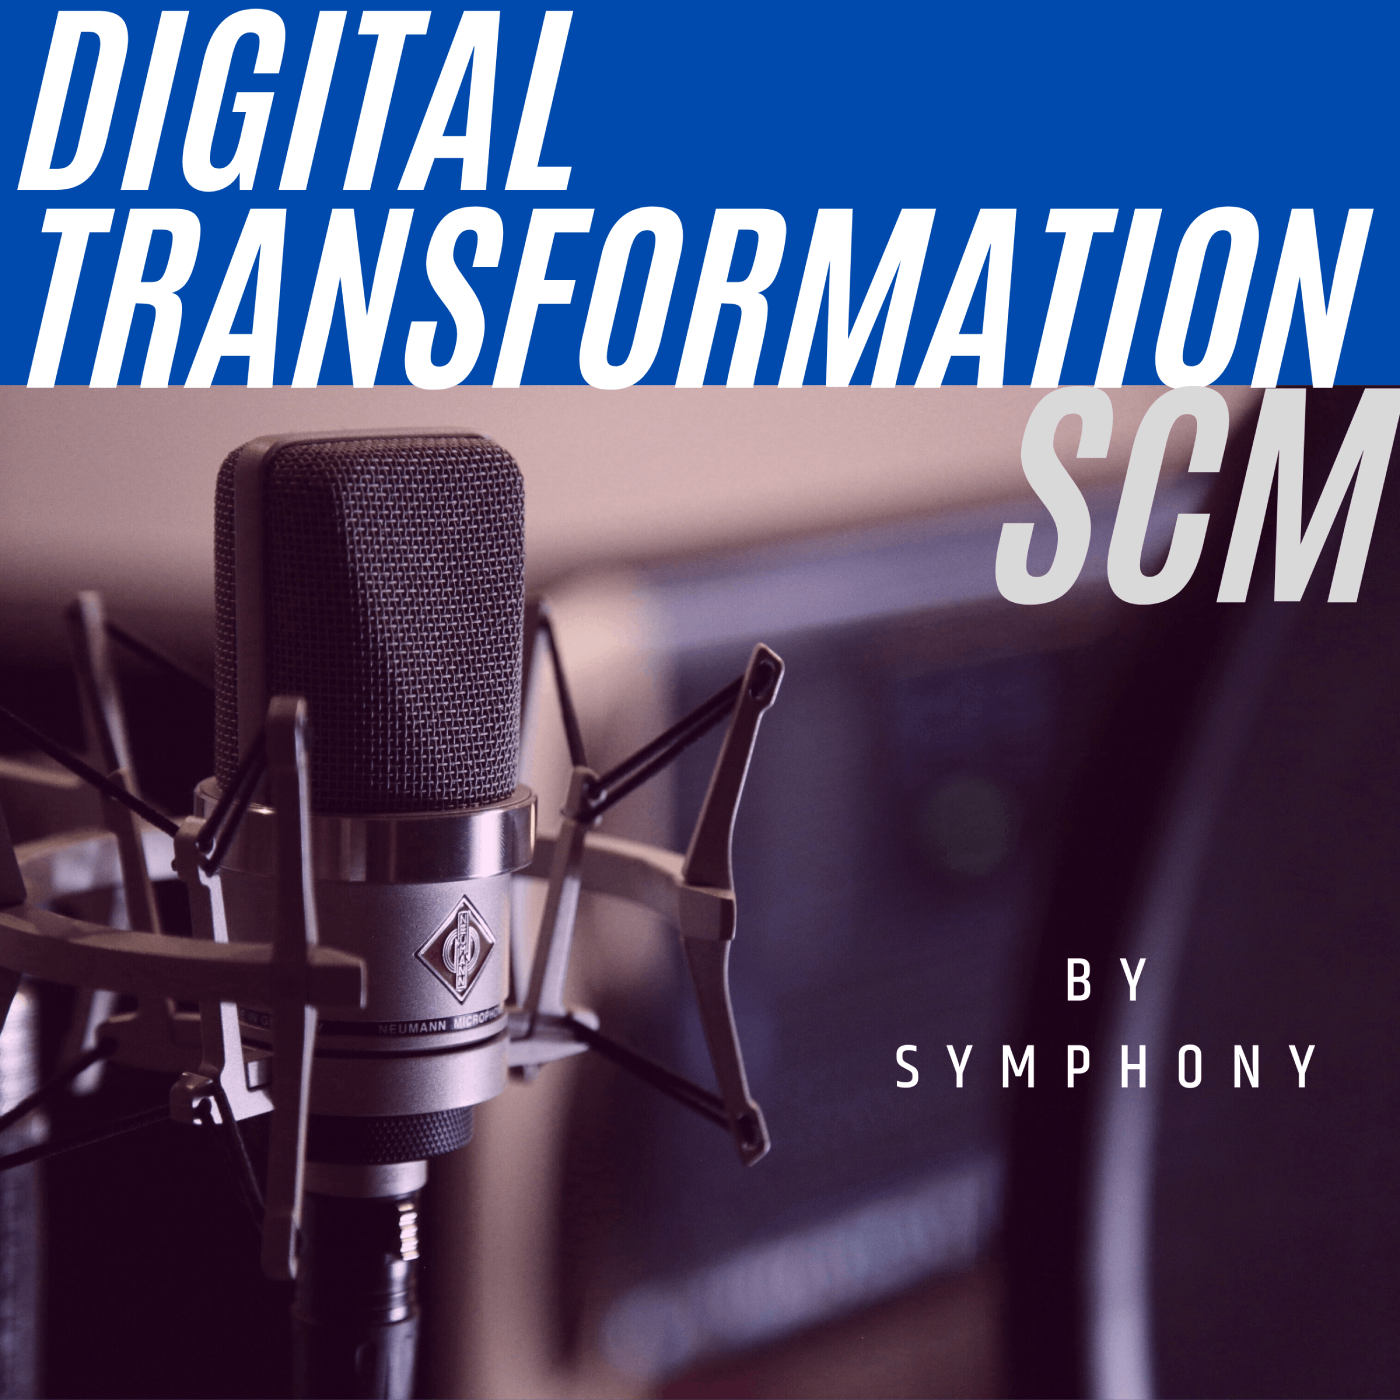 Podcast Digital Transformation SCM